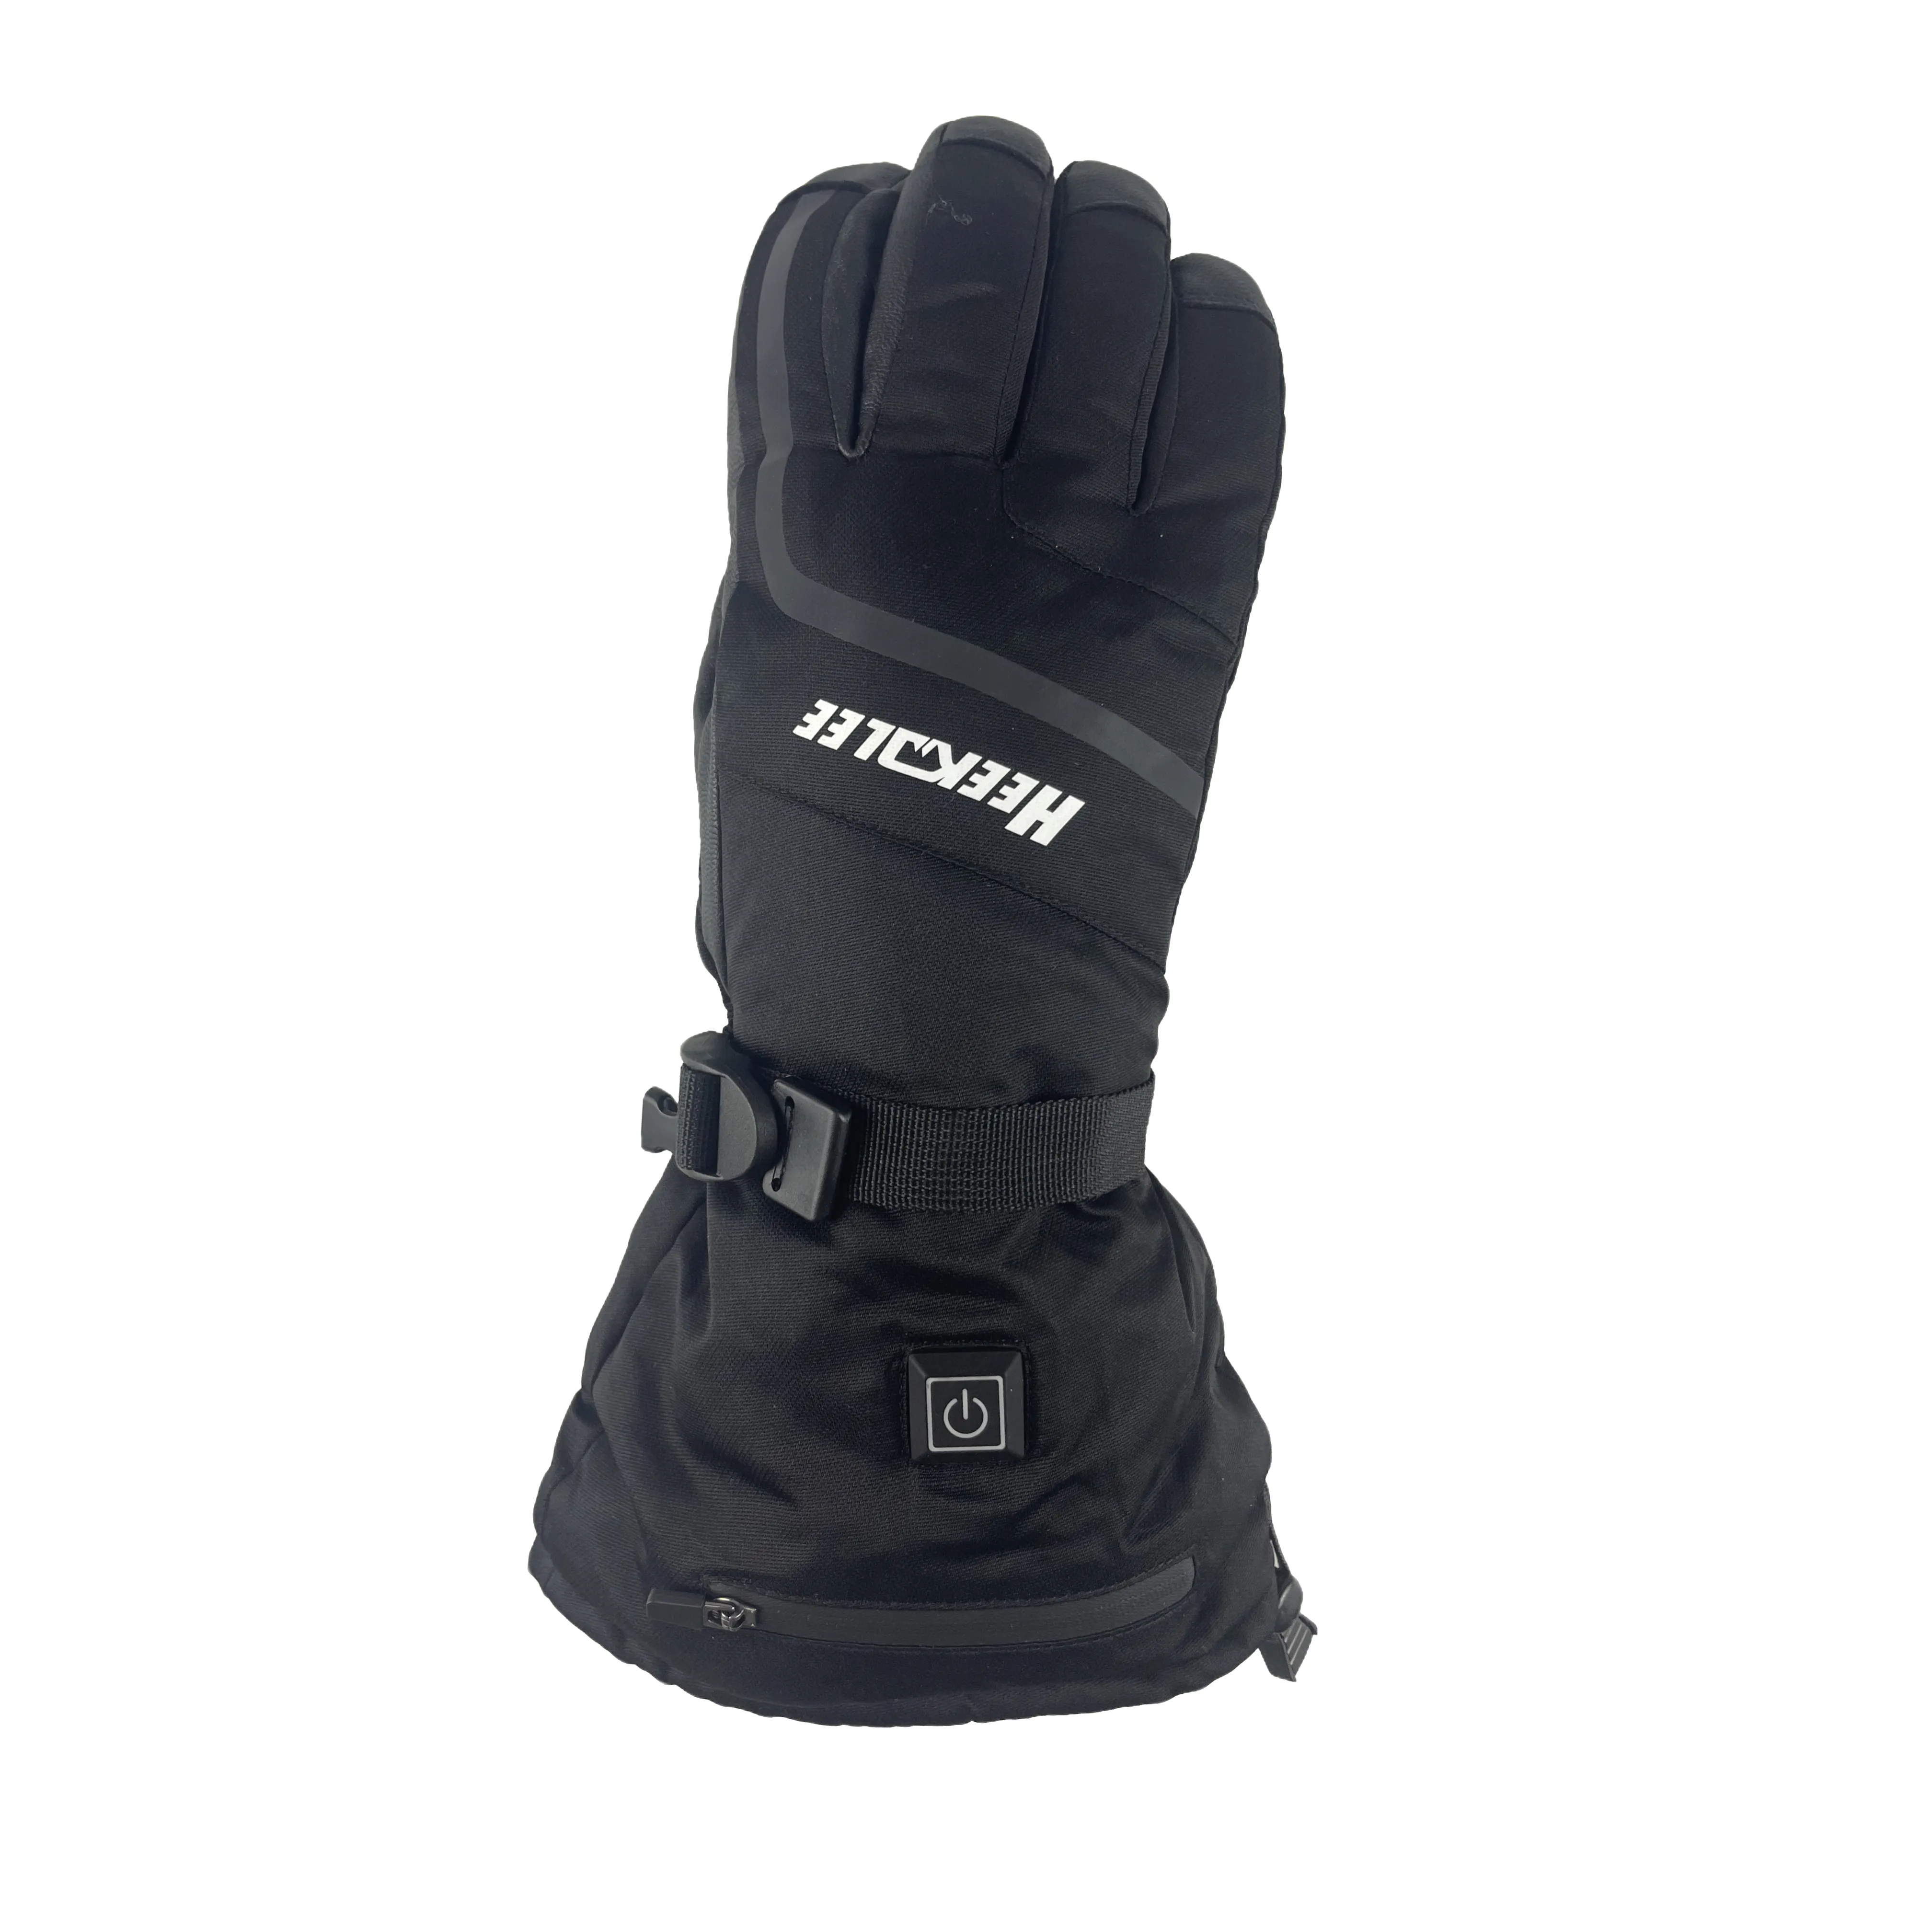 Winter Outdoor Touchscreen-Aufladung Heizung warme Outdoor-Handschuhe für Wandern Sport Ski-Handschuhe